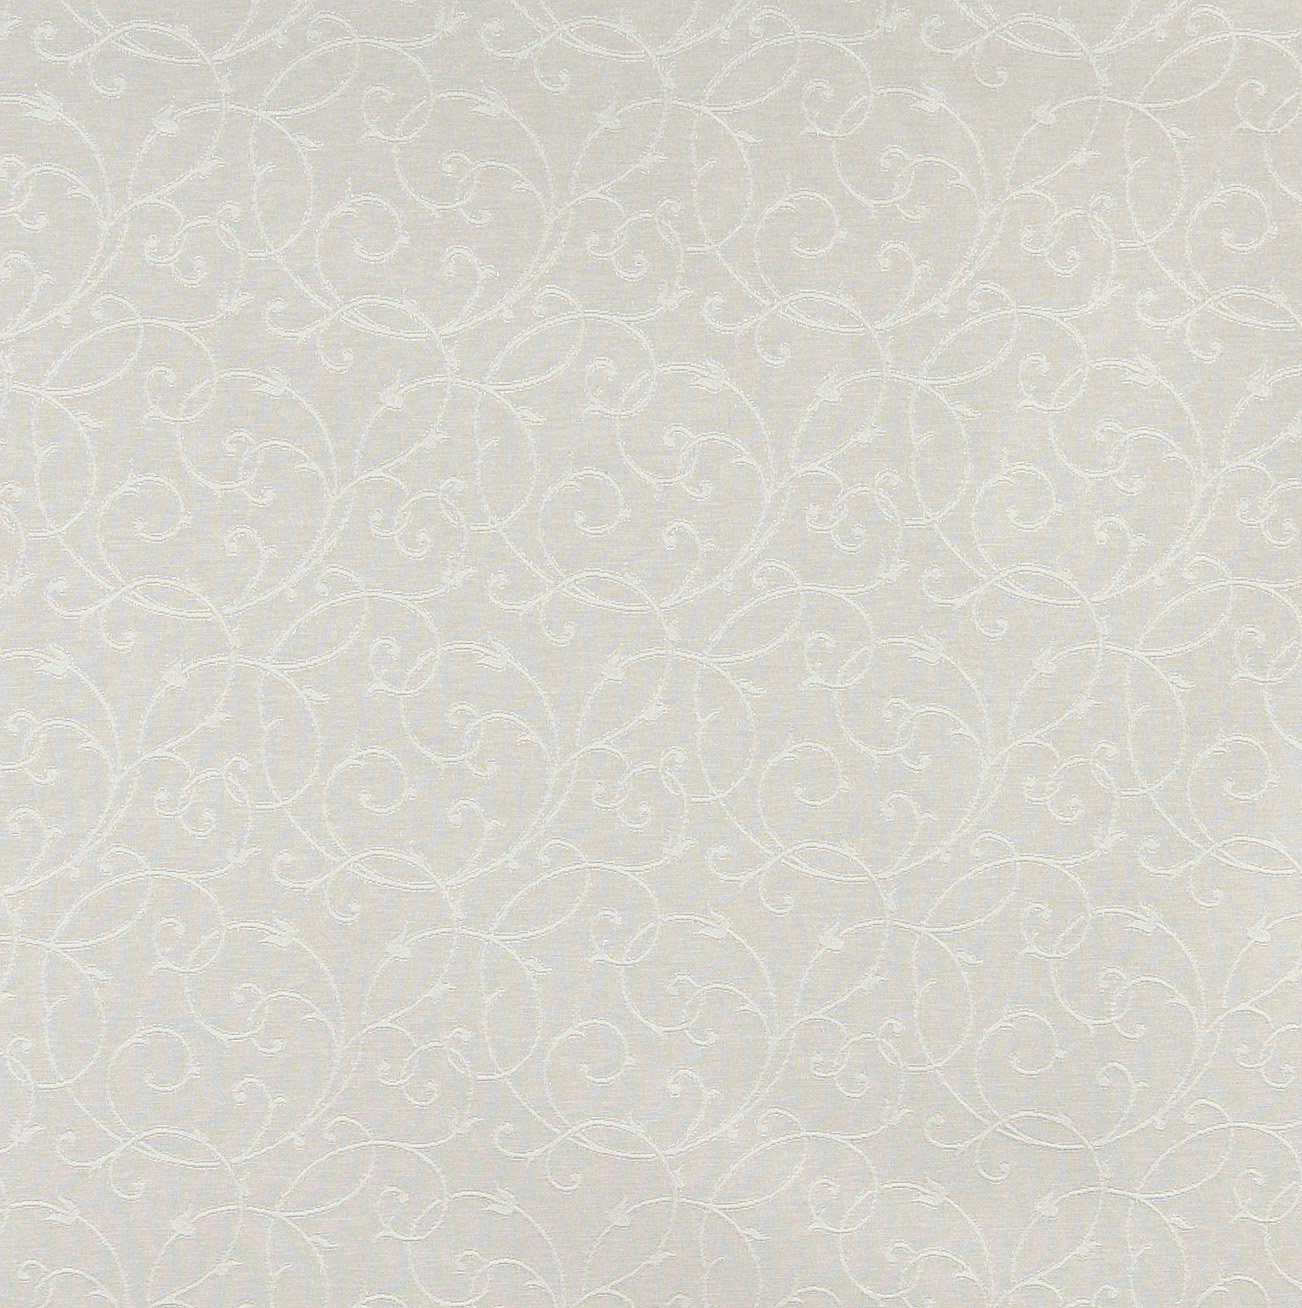 C154 Off White Scroll Lattice Trellis Linen Look Upholstery Window ...